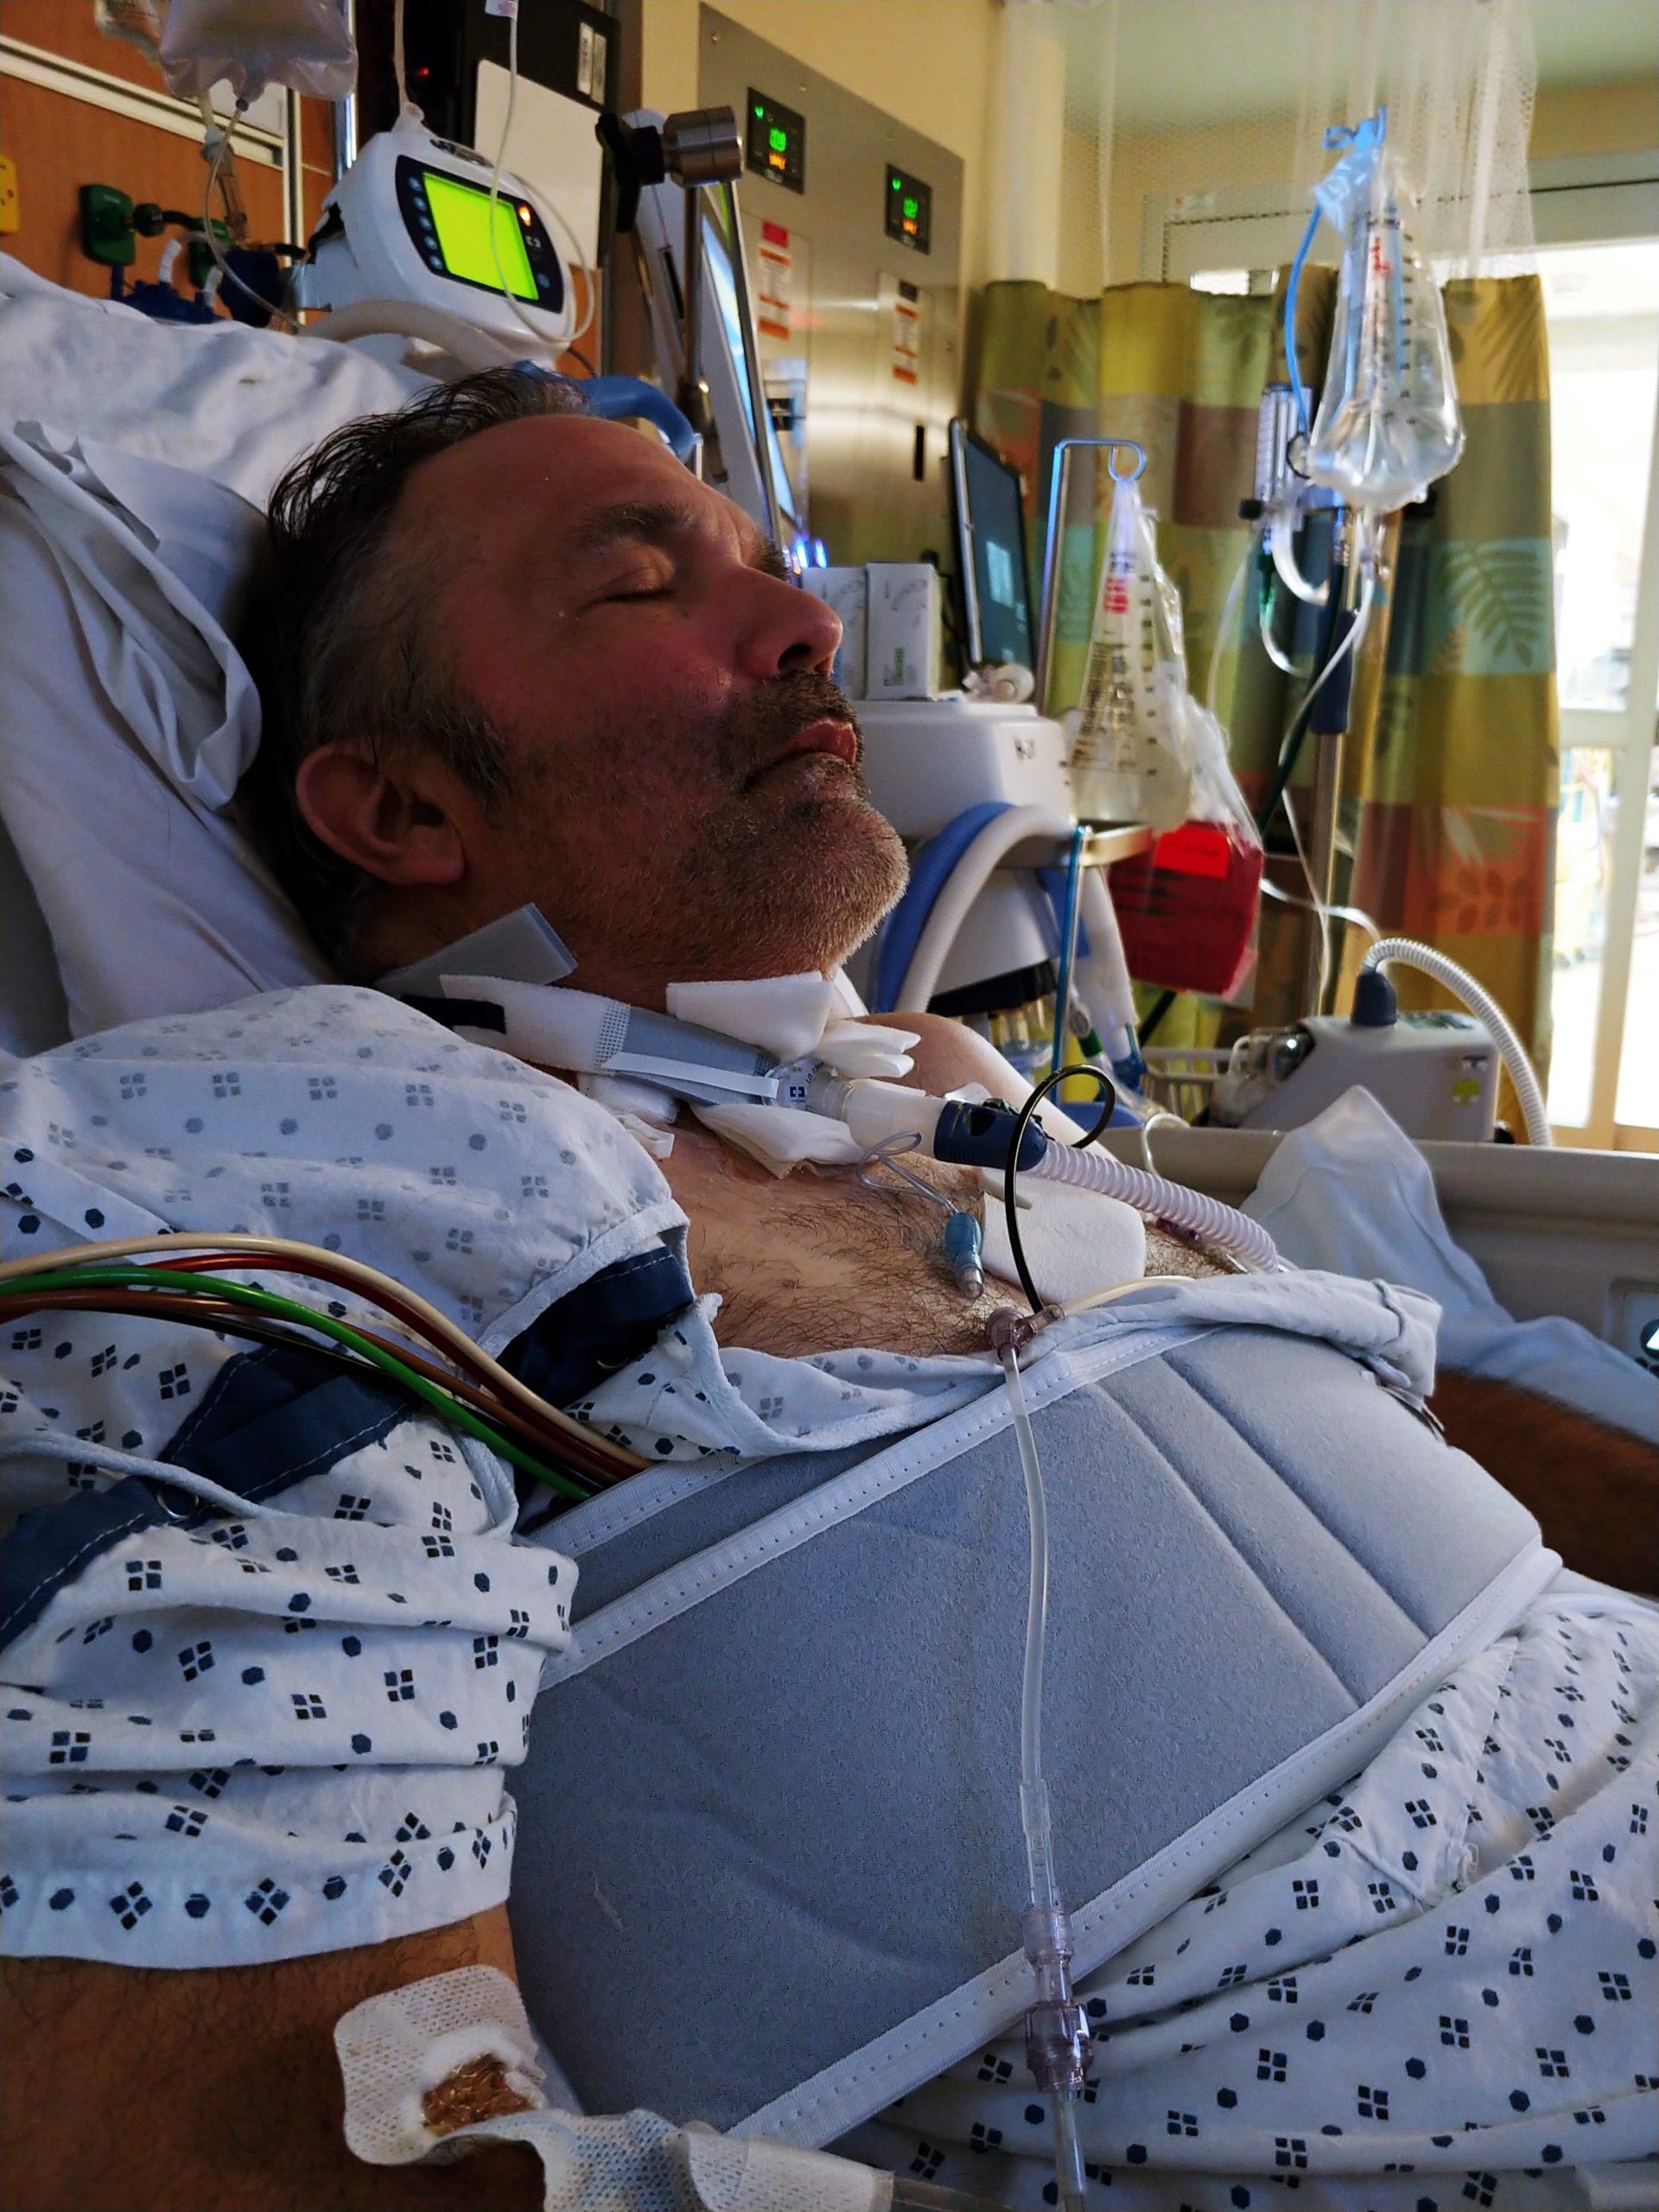 Rufus Brown in hospital on ECMO machine.